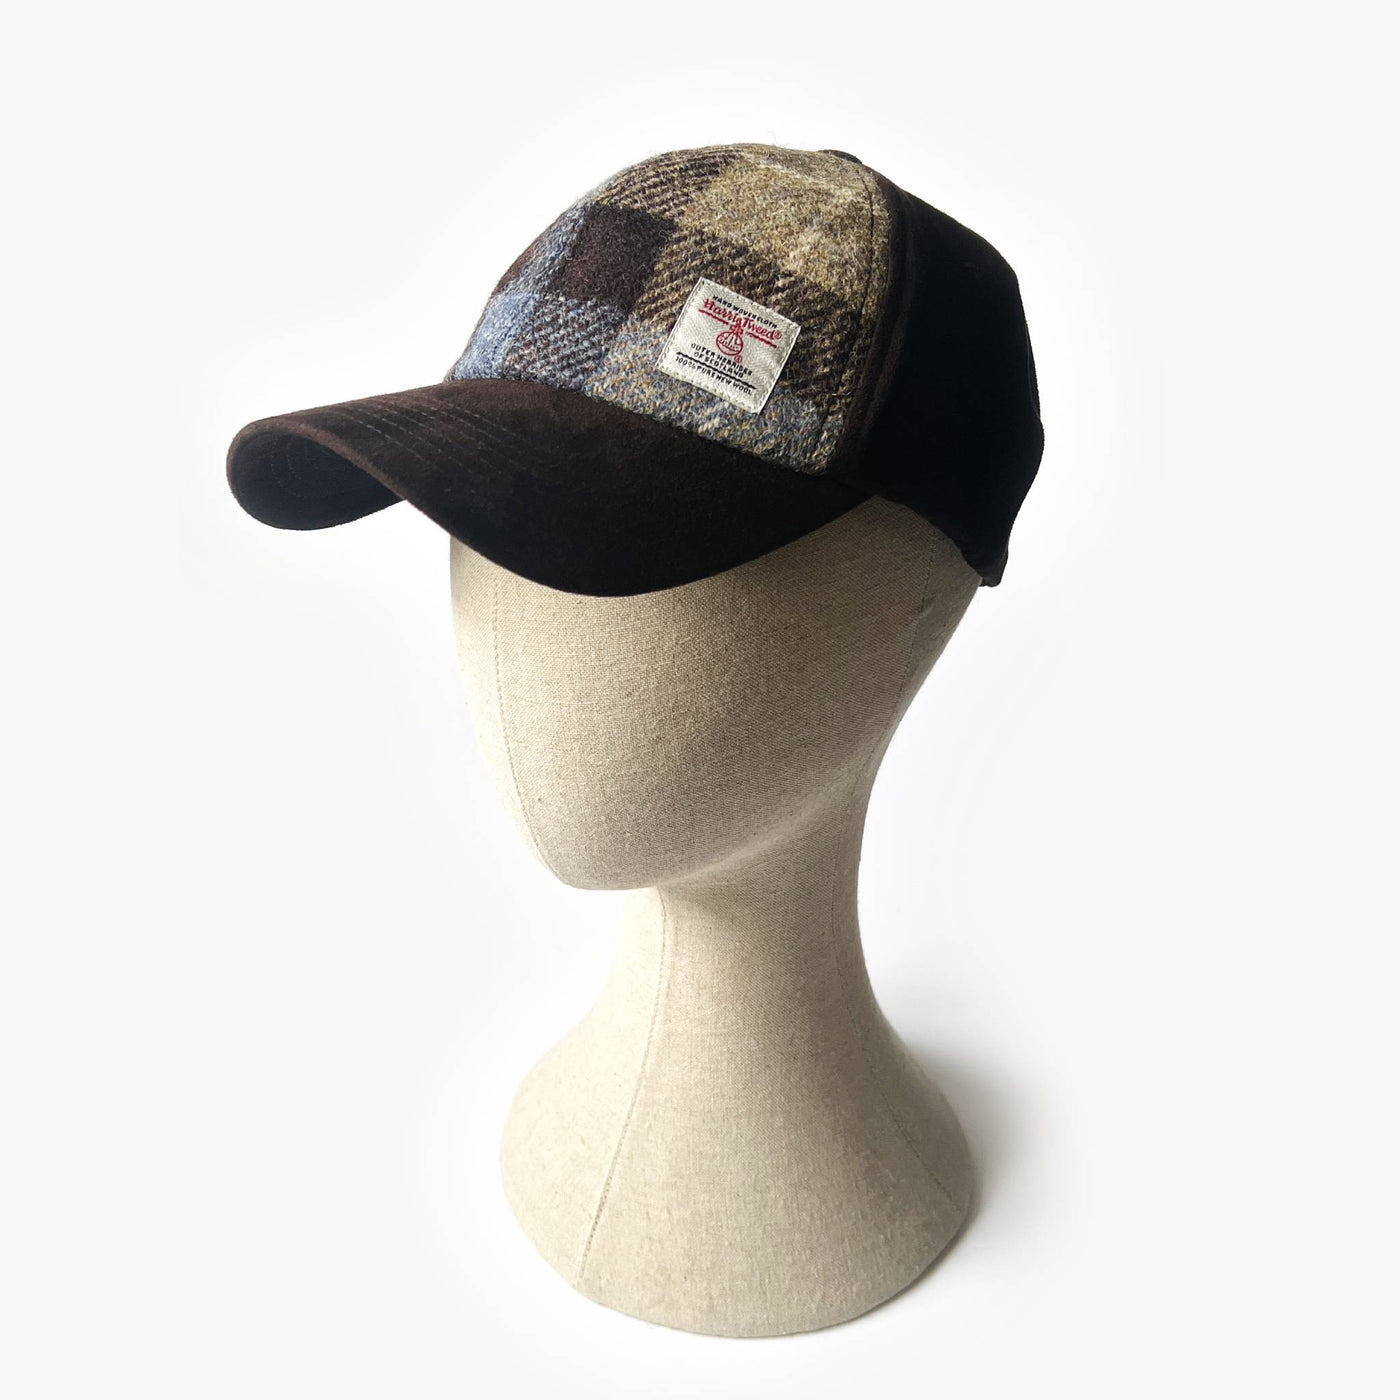 Harris Tweed® Baseball Cap - Blue/Brown Check - The Pretty Hat